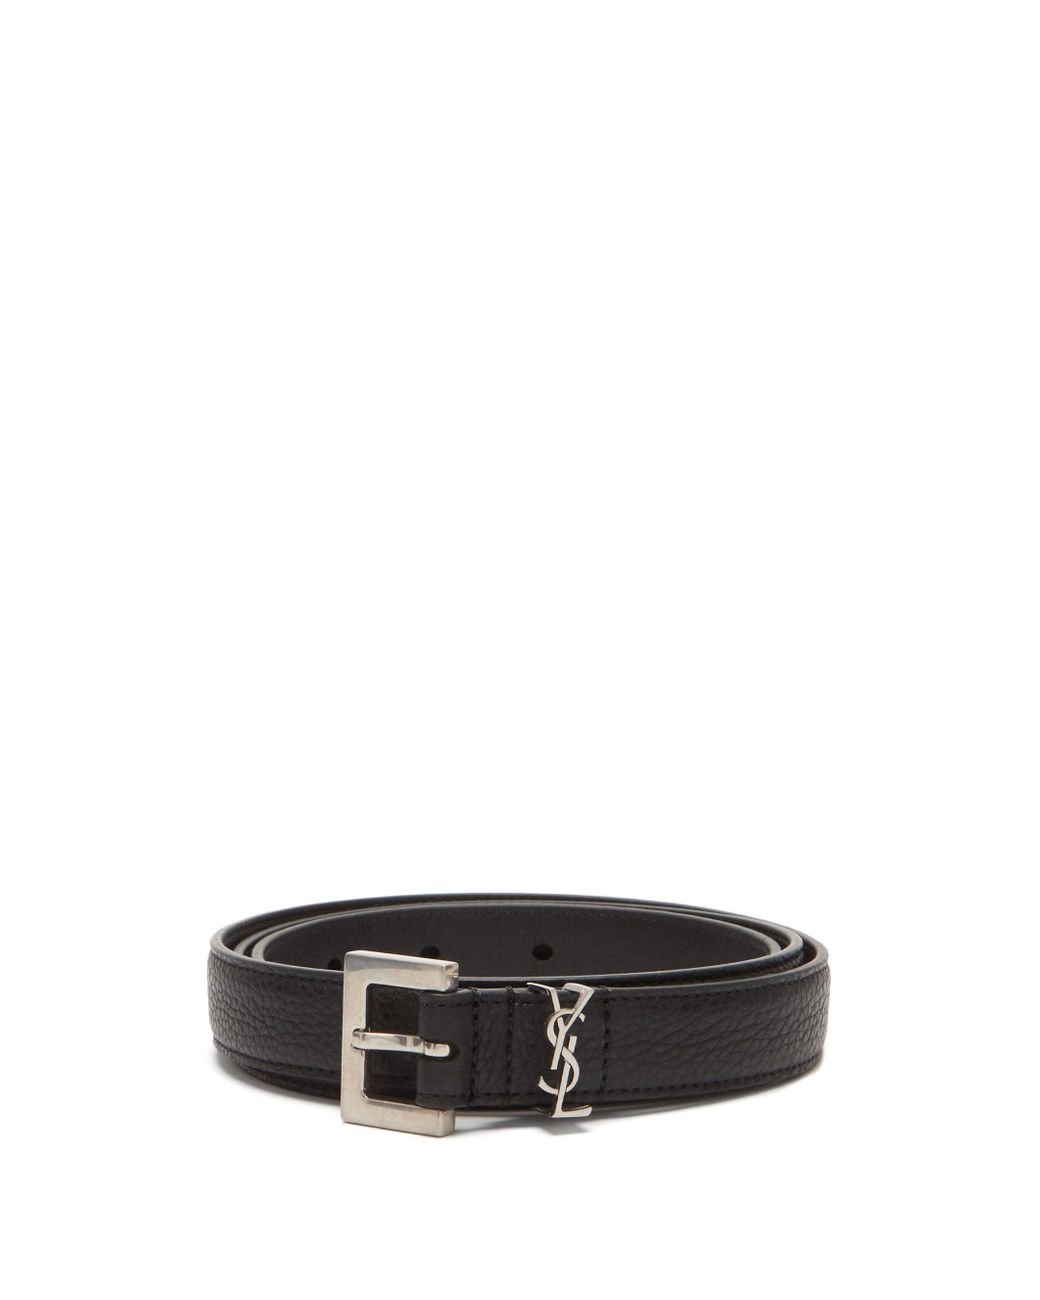 Saint Laurent Ysl-monogram Grained-leather Belt in Black for Men - Lyst